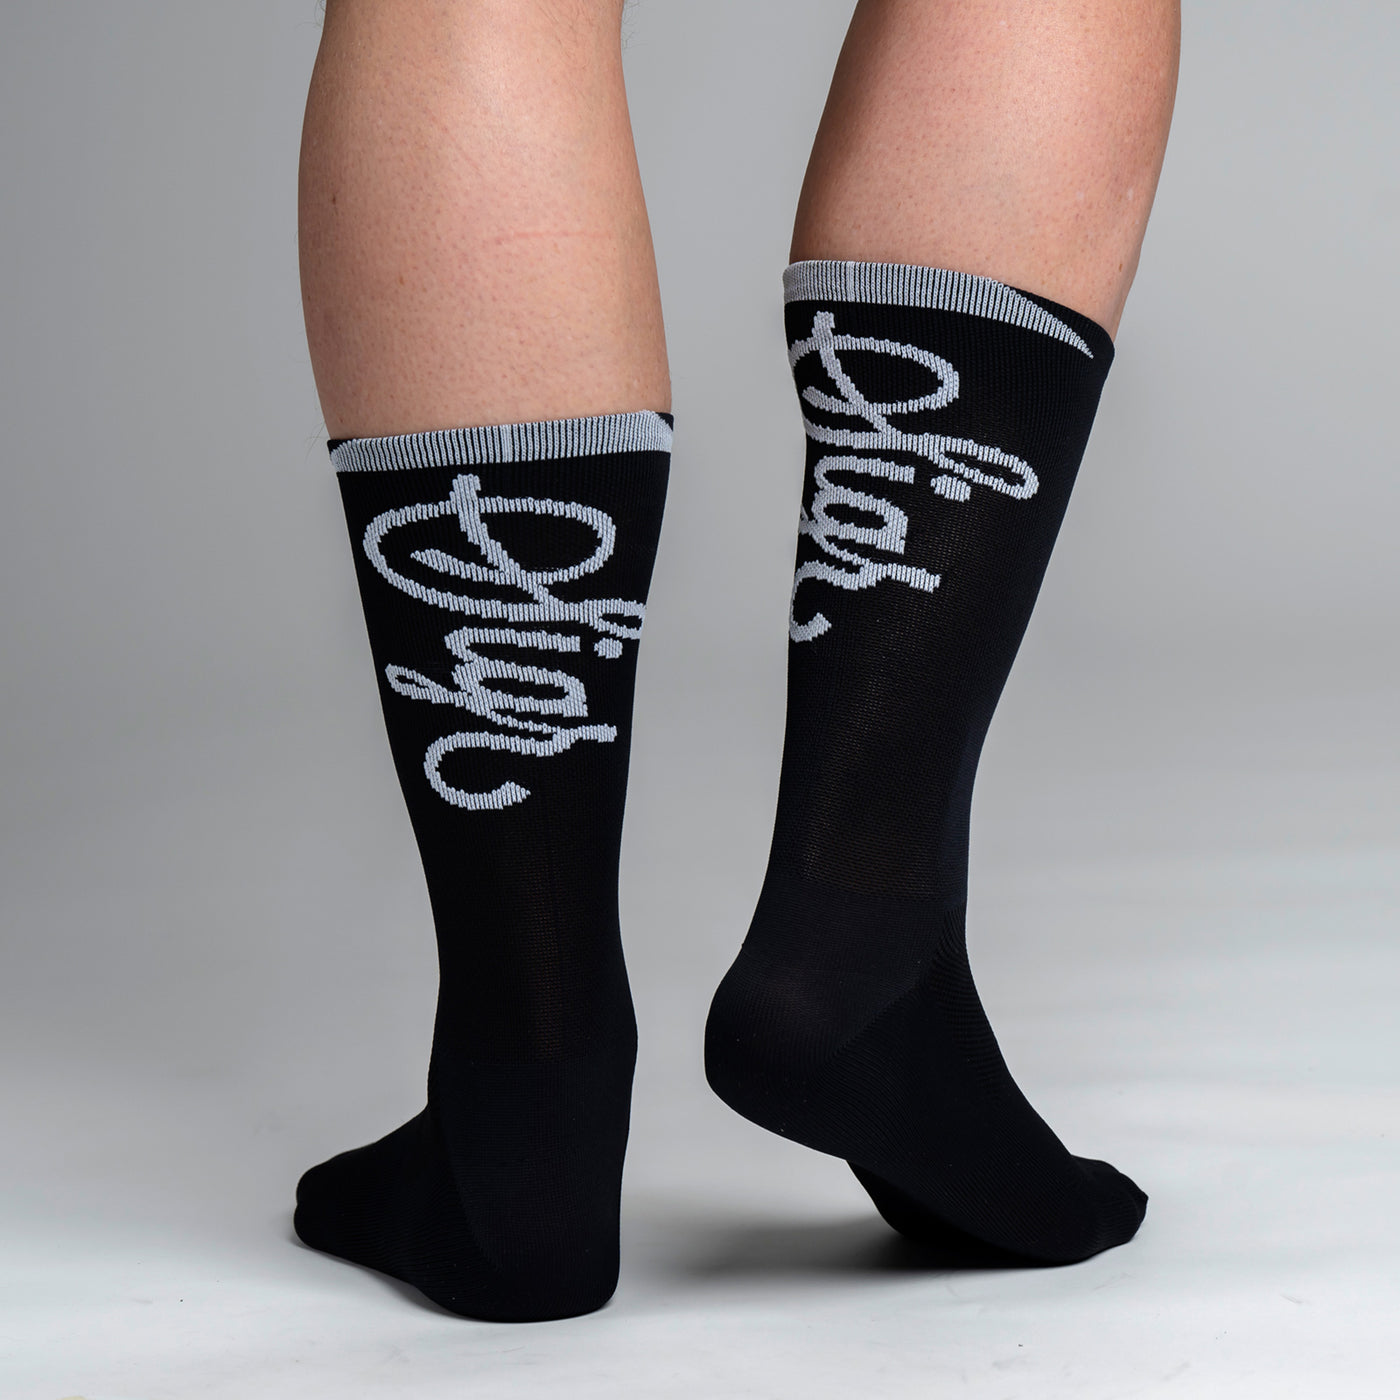 Snok - Larger Logo Black Cycling Socks for Men - Pack of 2 pairs